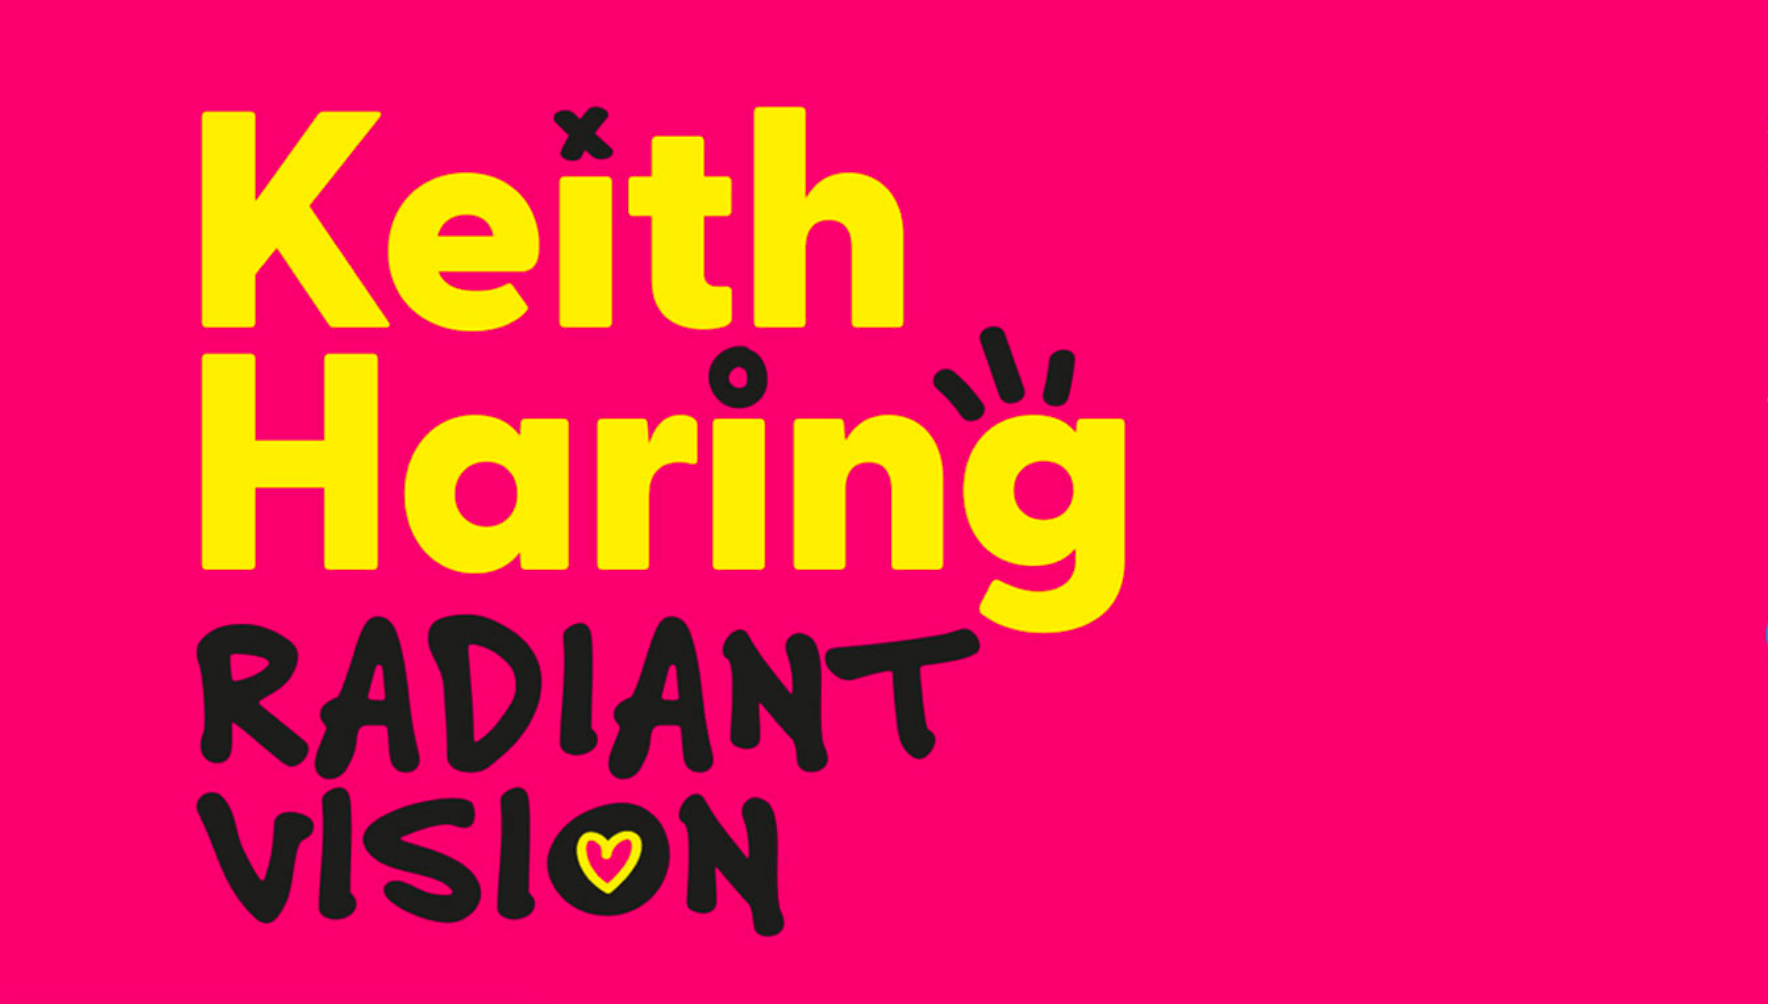 Keith Haring – Radiant Vision